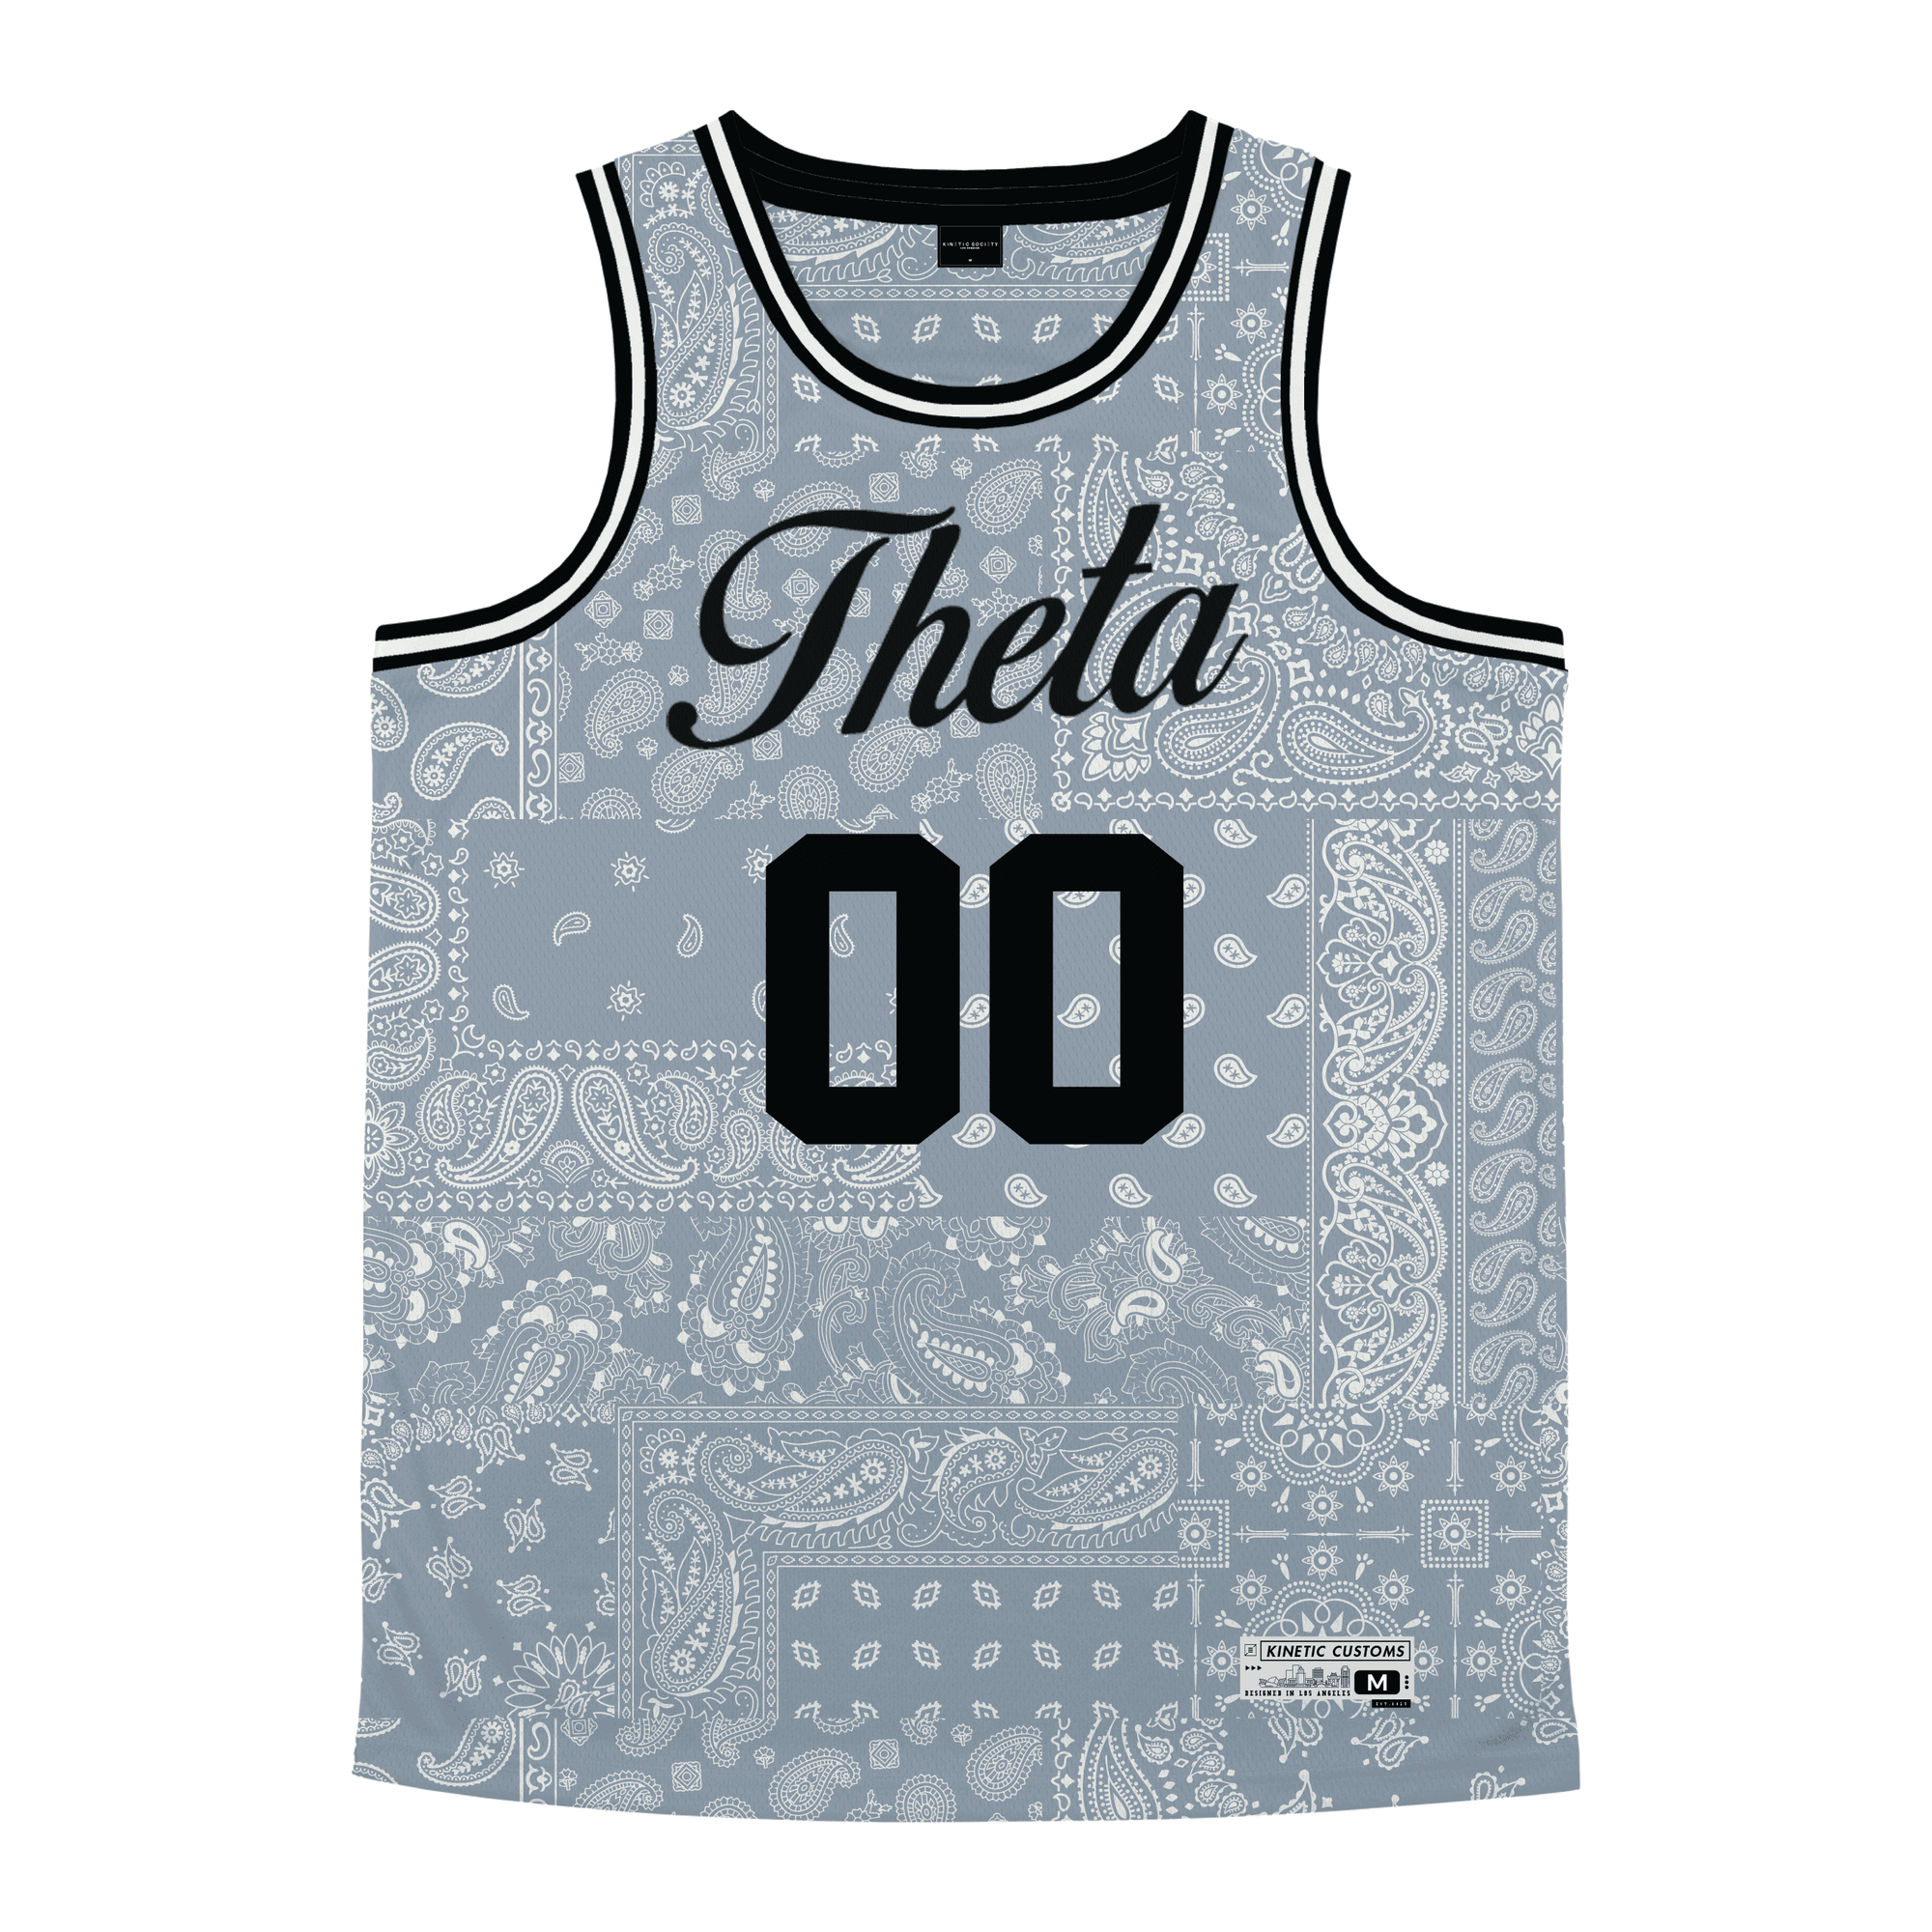 Kappa Alpha Theta - Slate Bandana - Basketball Jersey